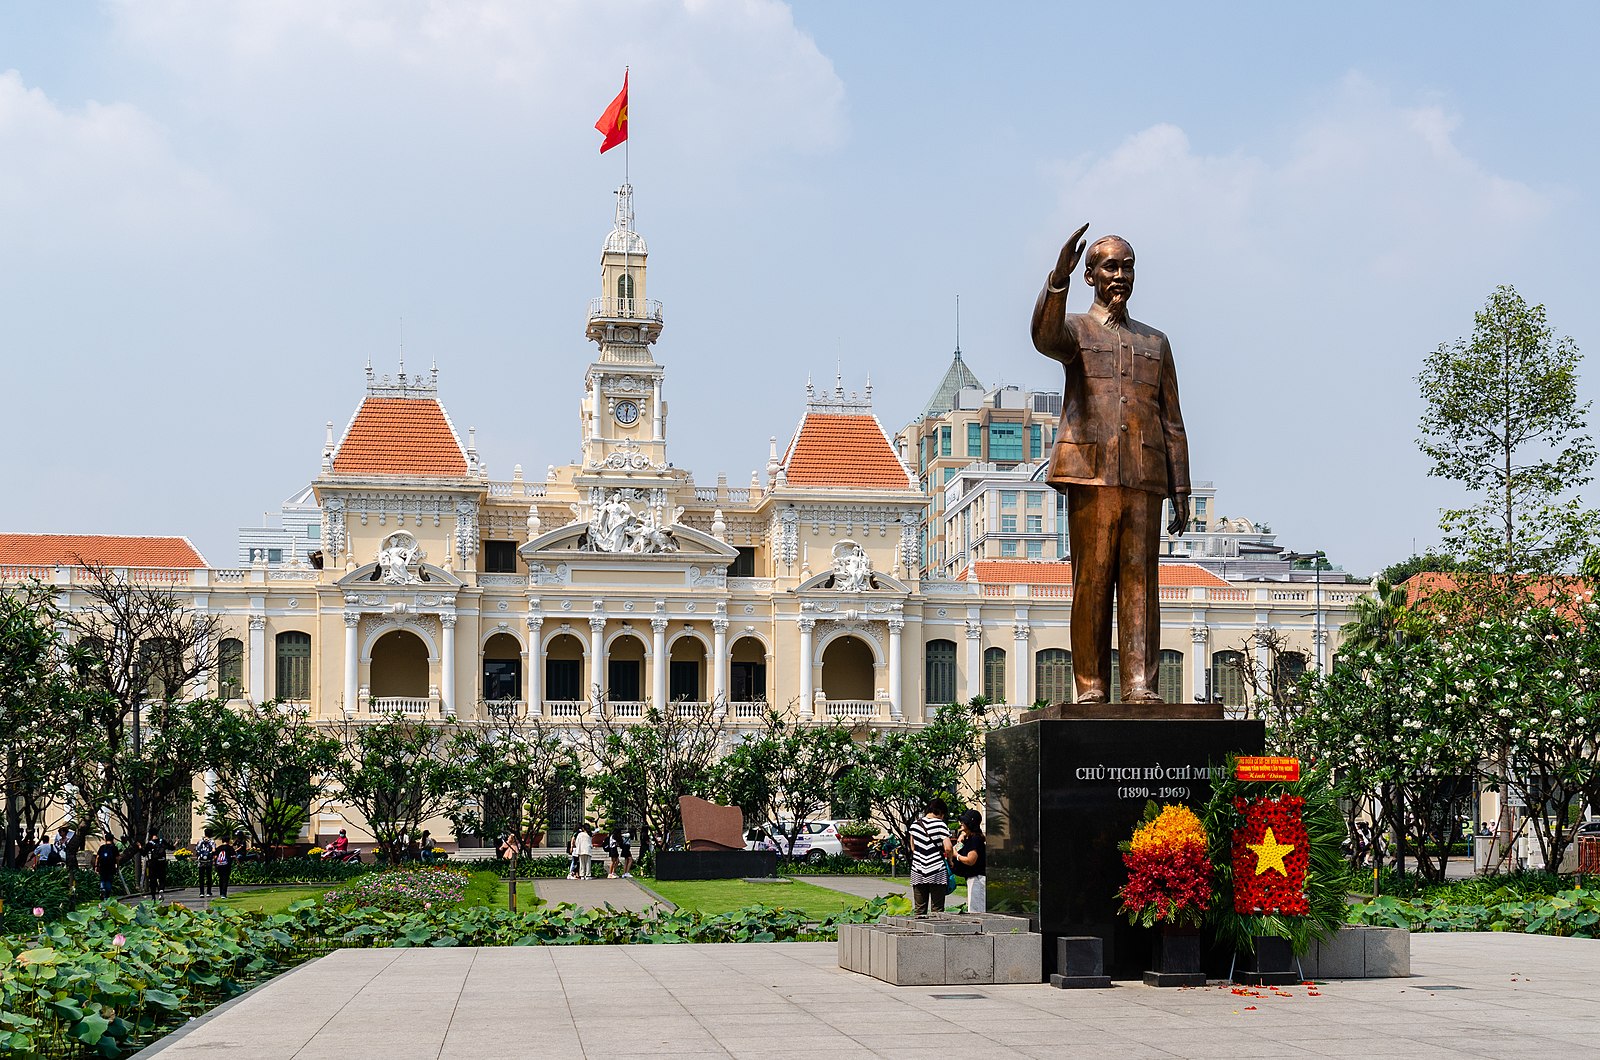 Ho Chi Minh statue outside city hall